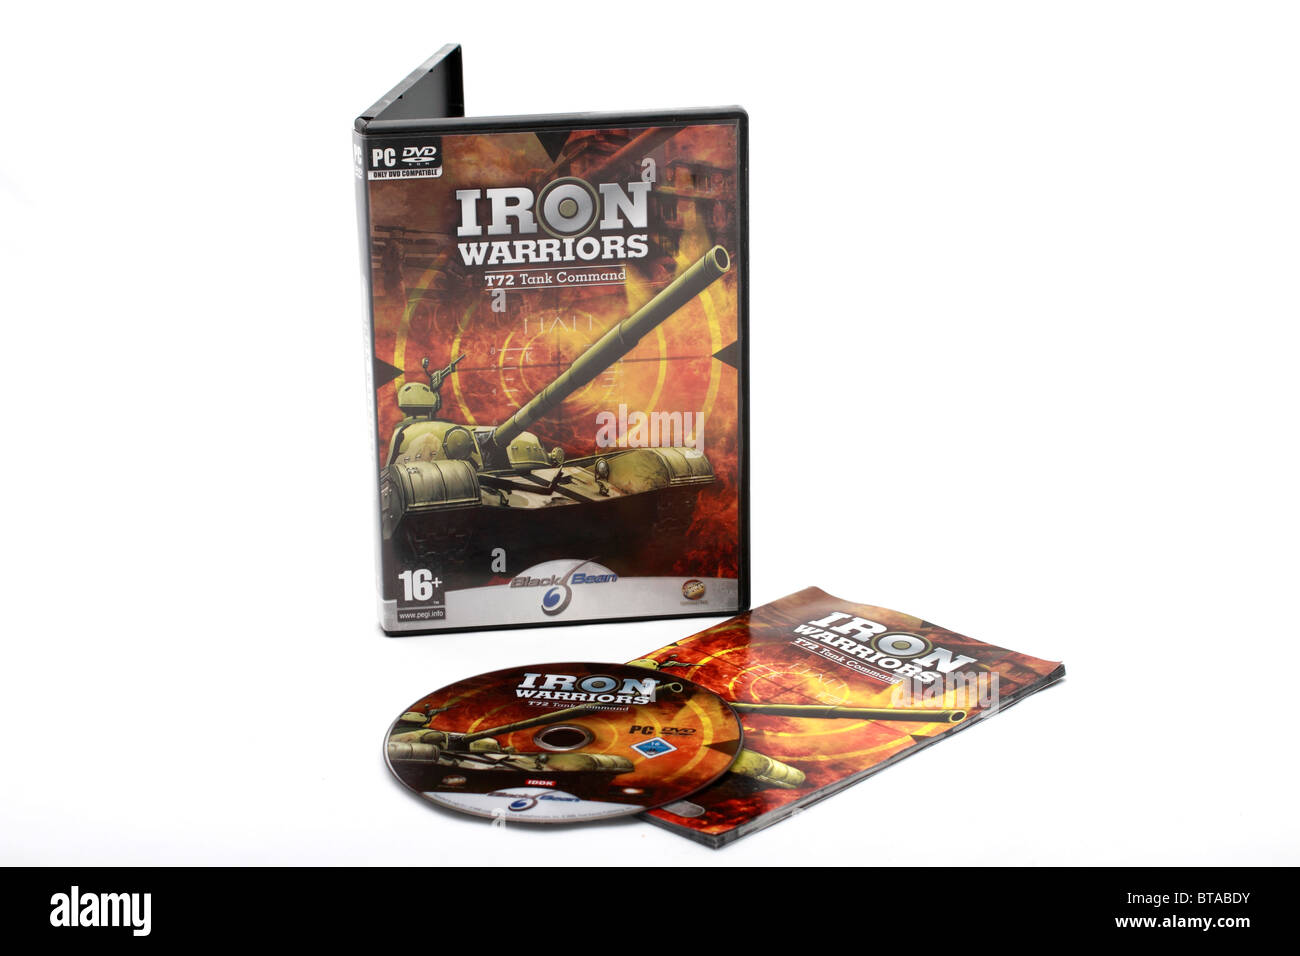 Iron Warriors, T72 Tank Command PC CD-ROM computer game Stock Photo